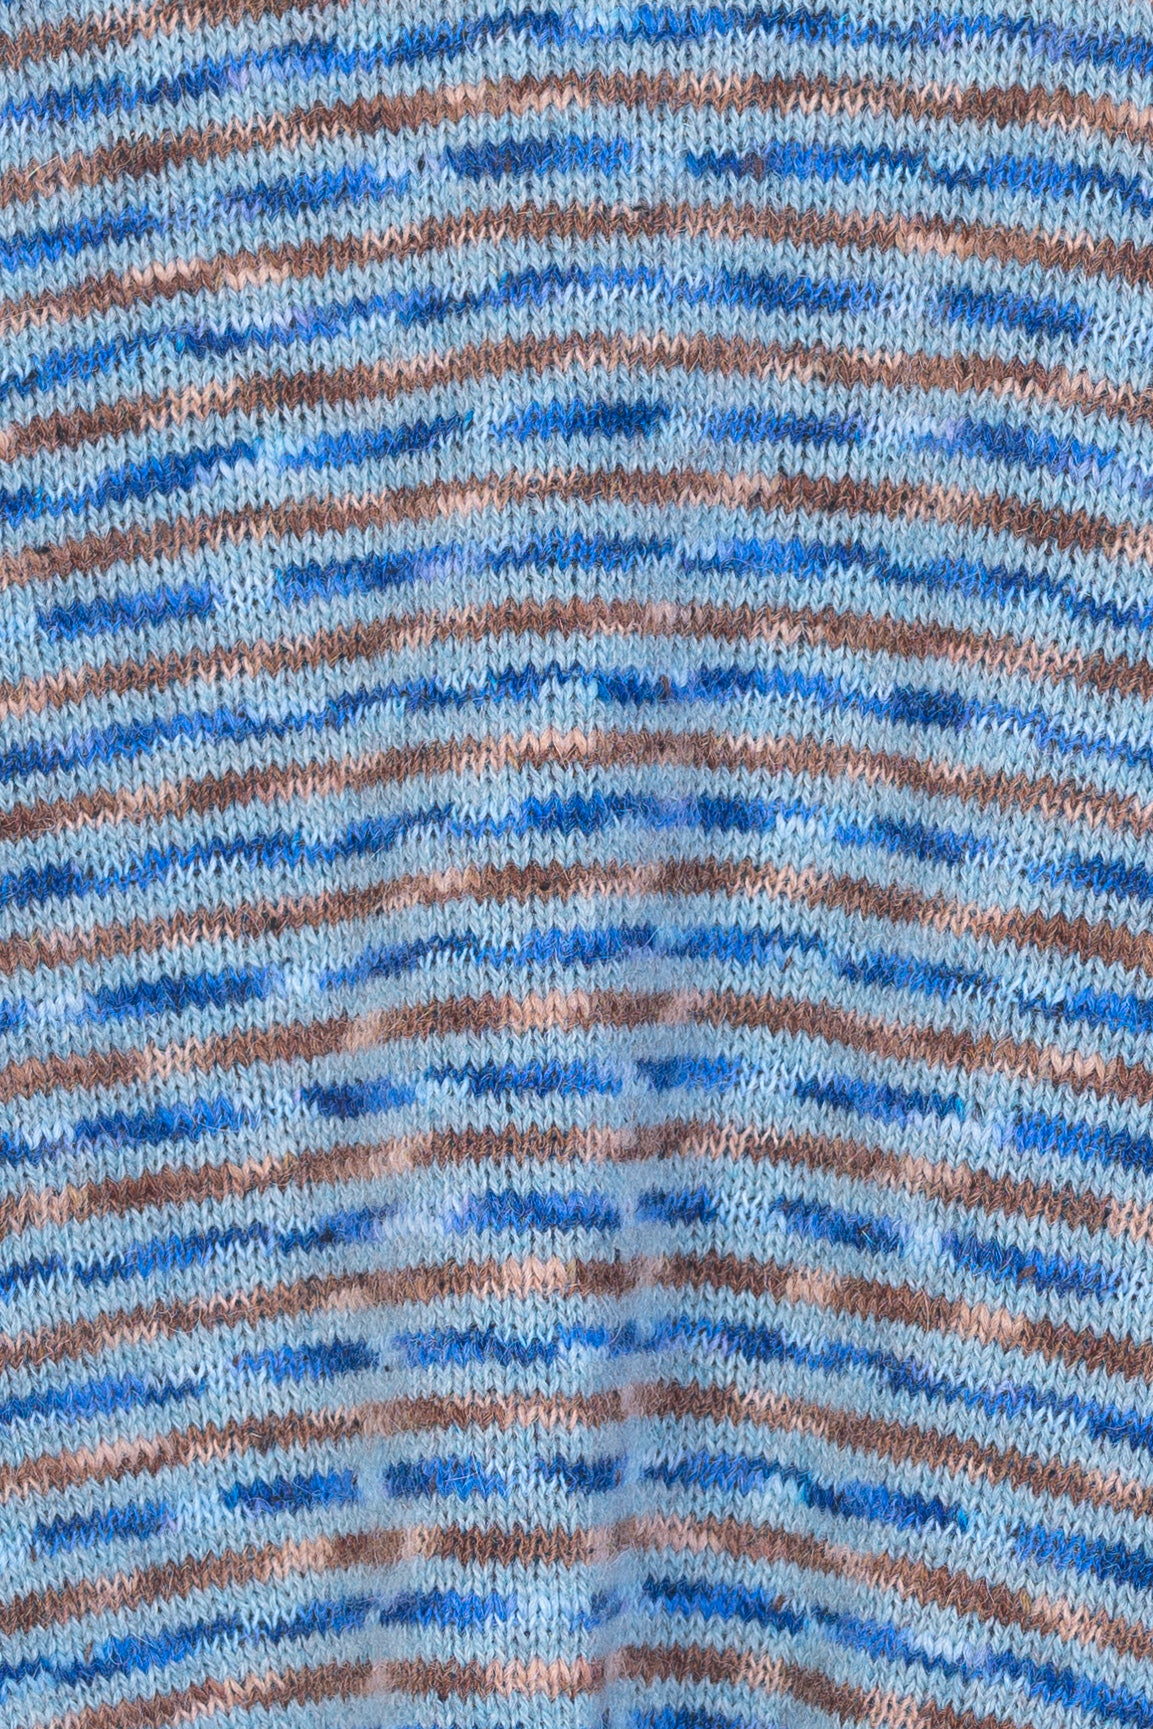 Melange Striped Sweater - Cropped length